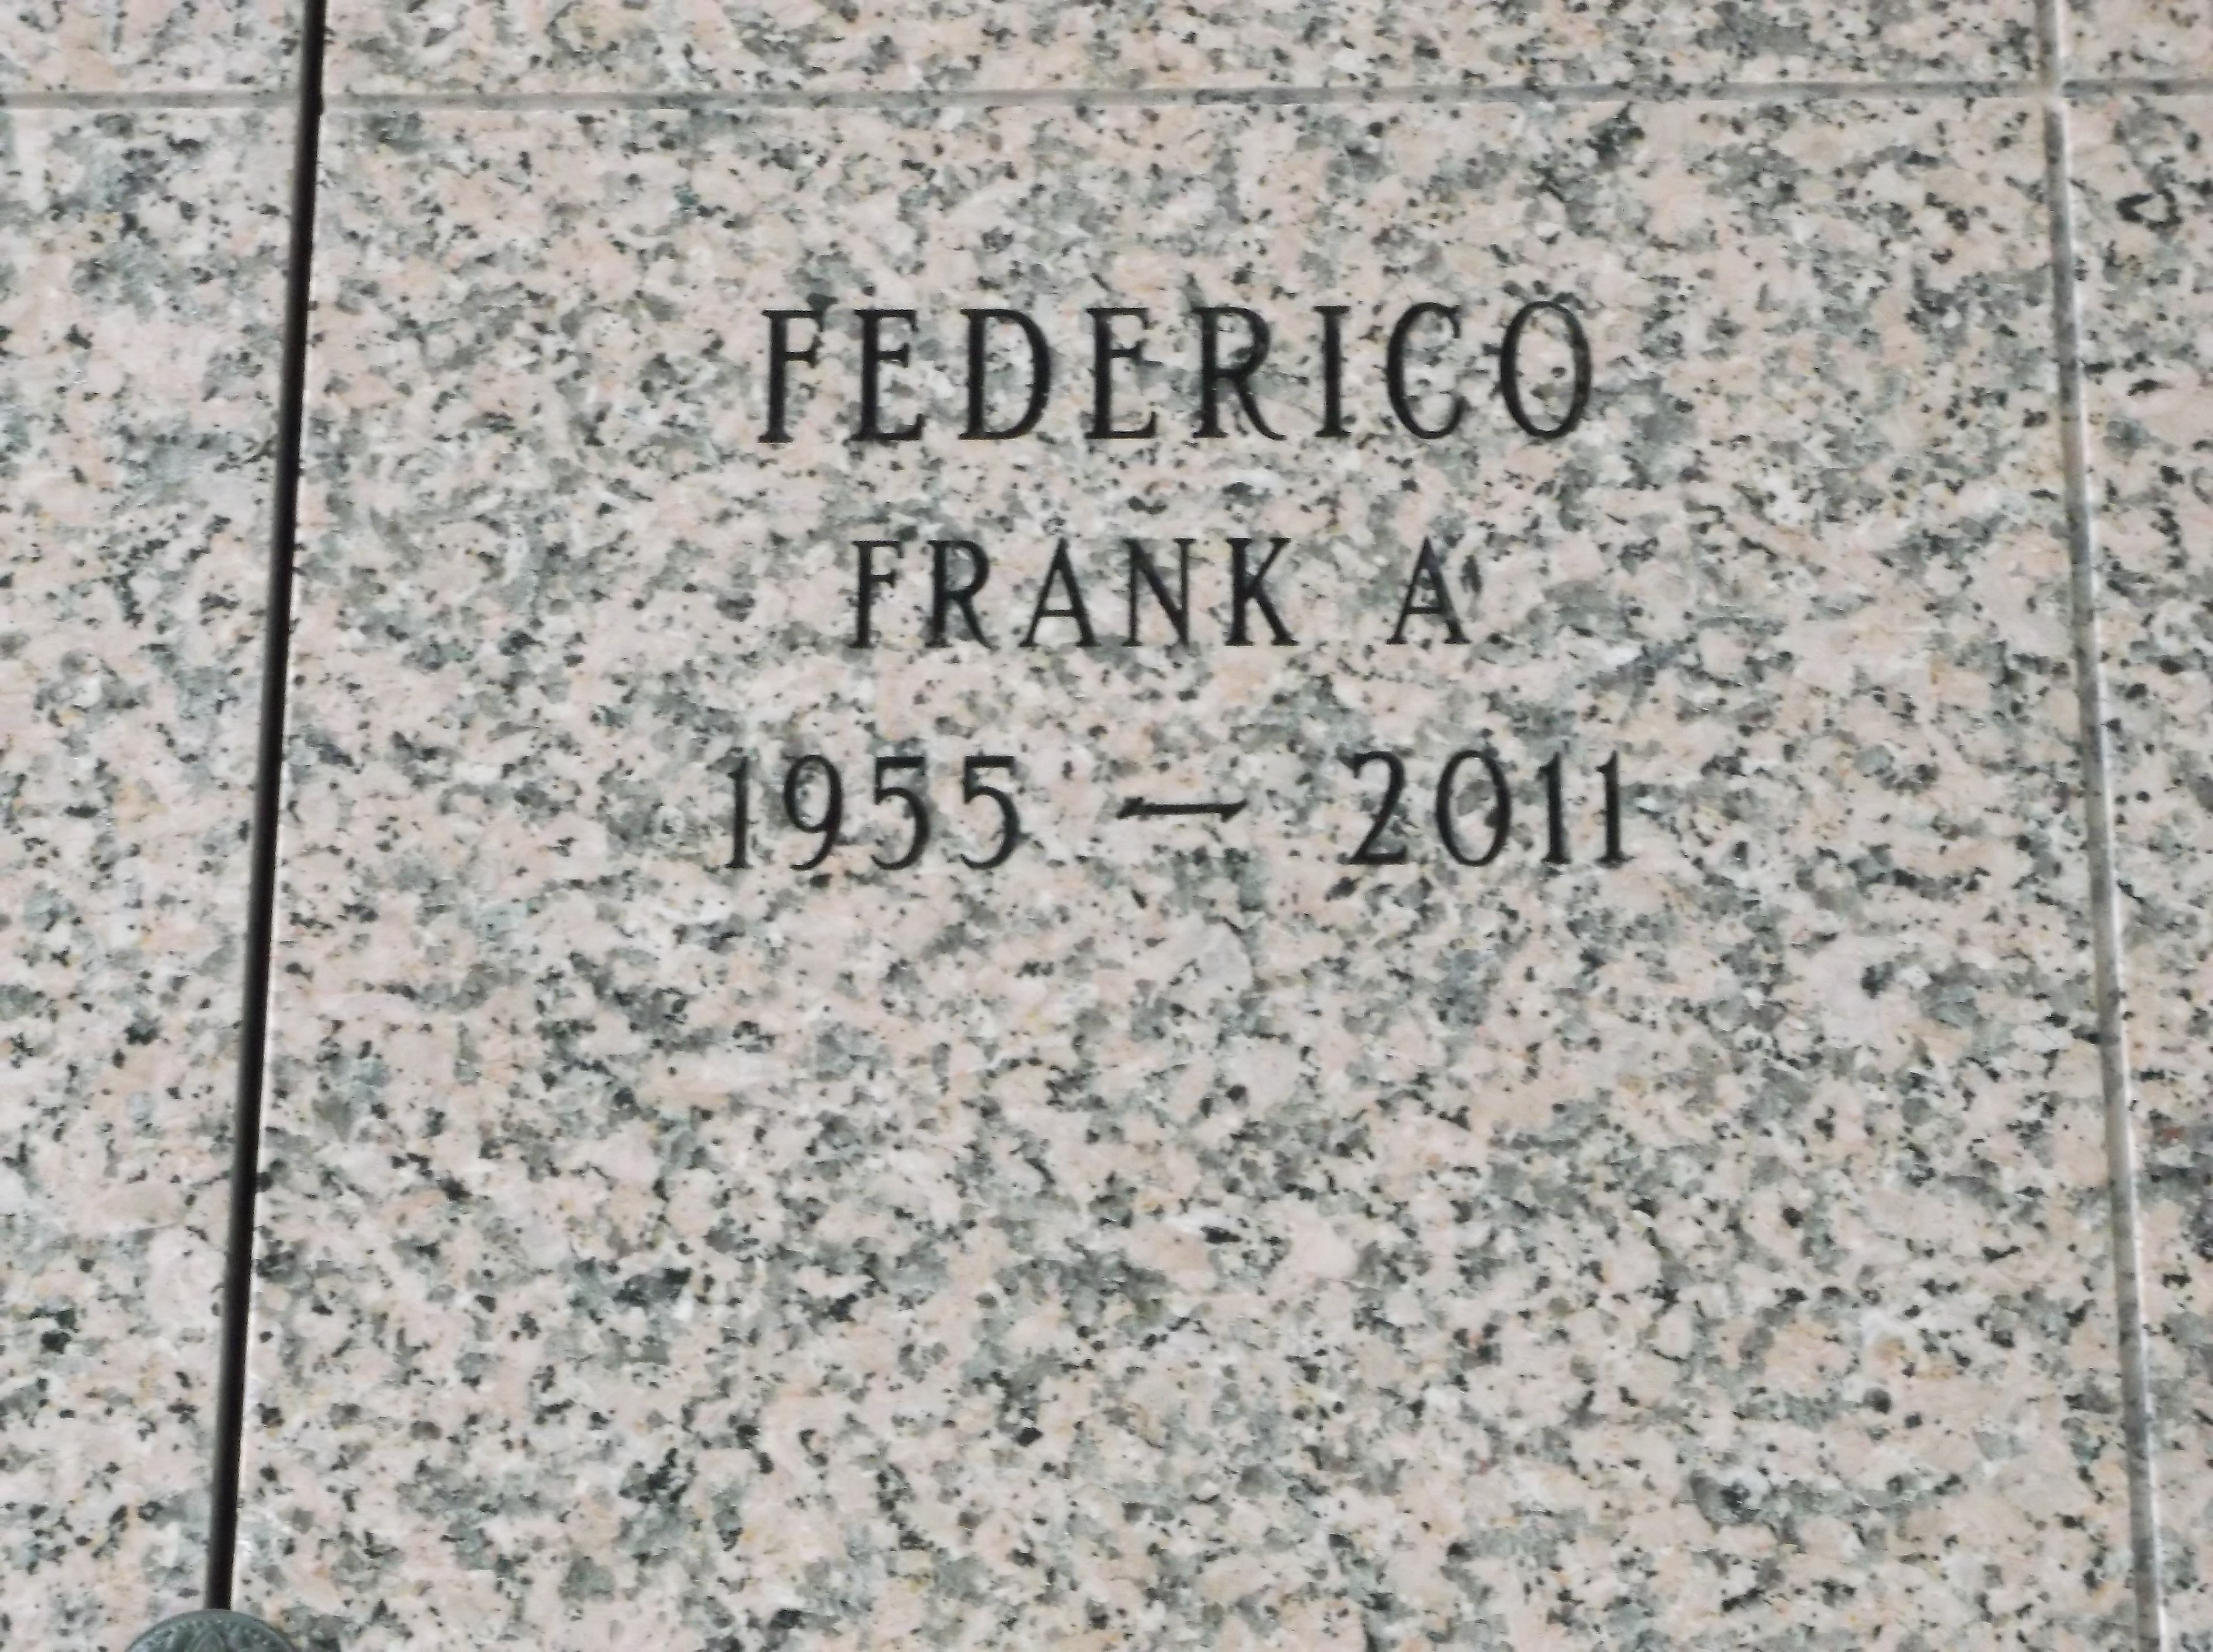 Frank A Federico